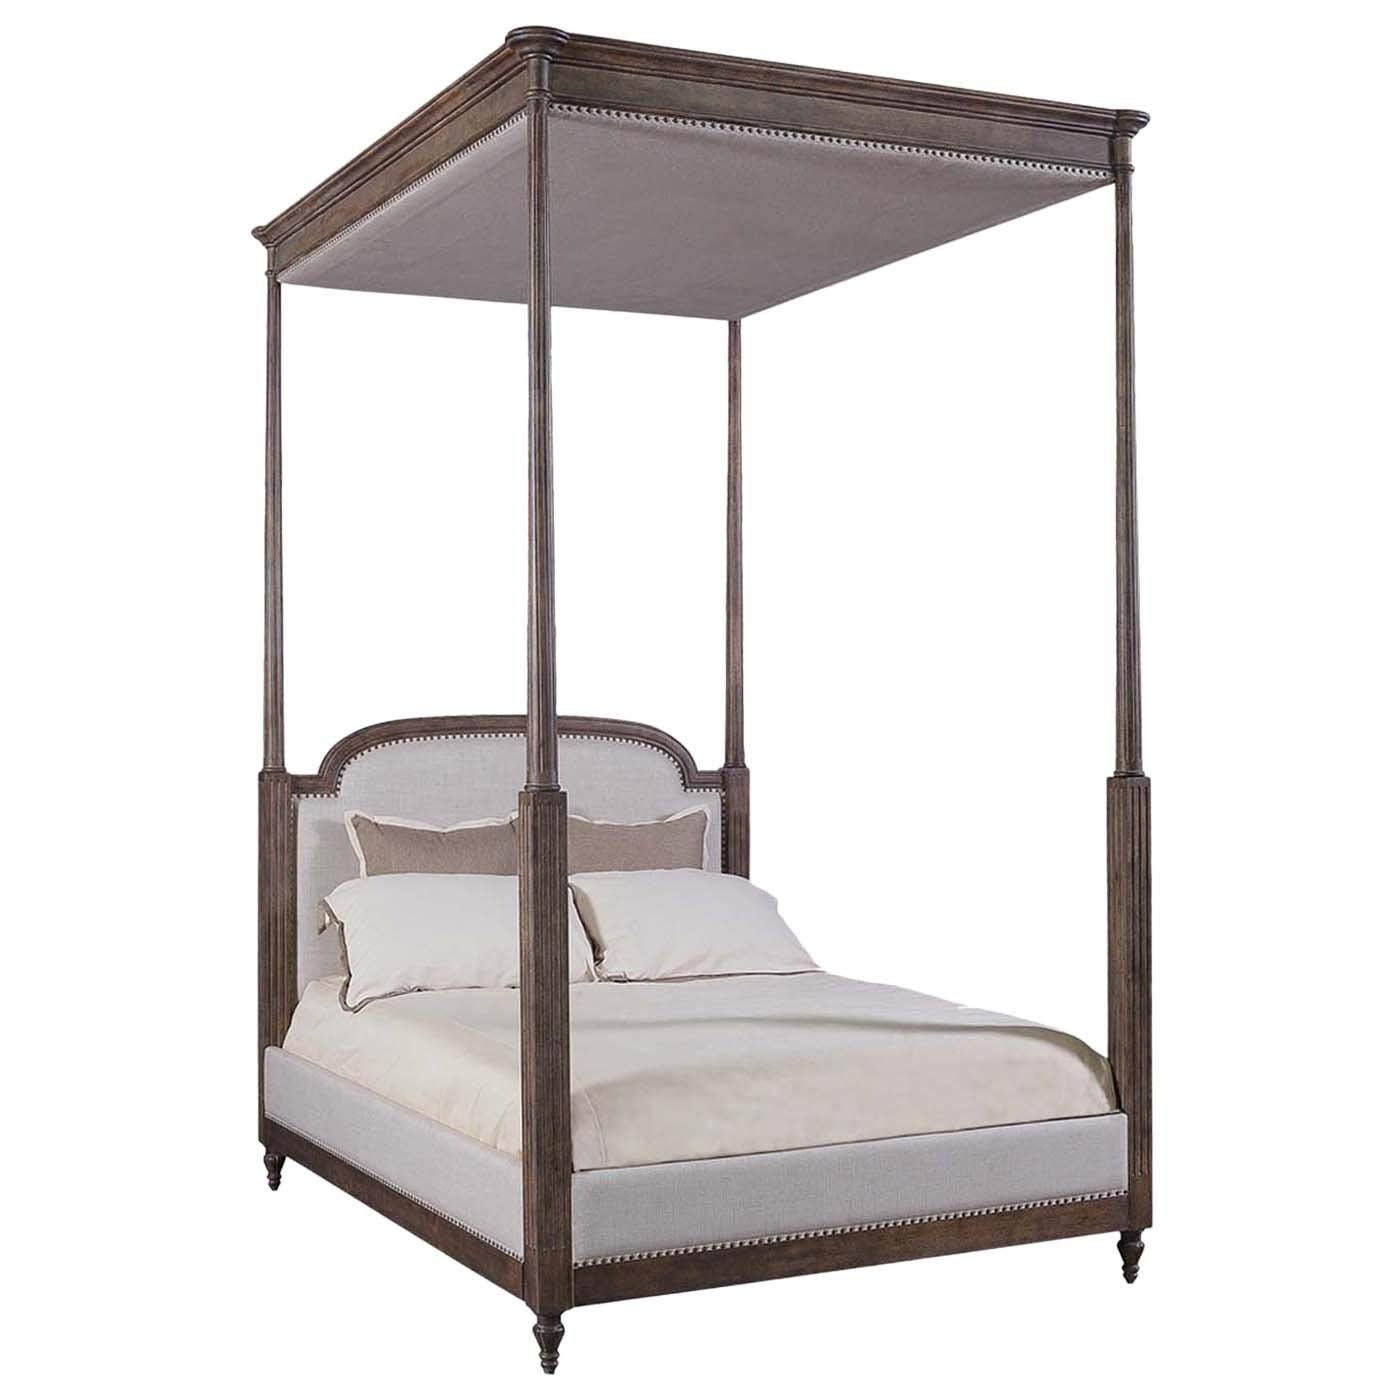 Impressive Canopy Bed Frame For Sale